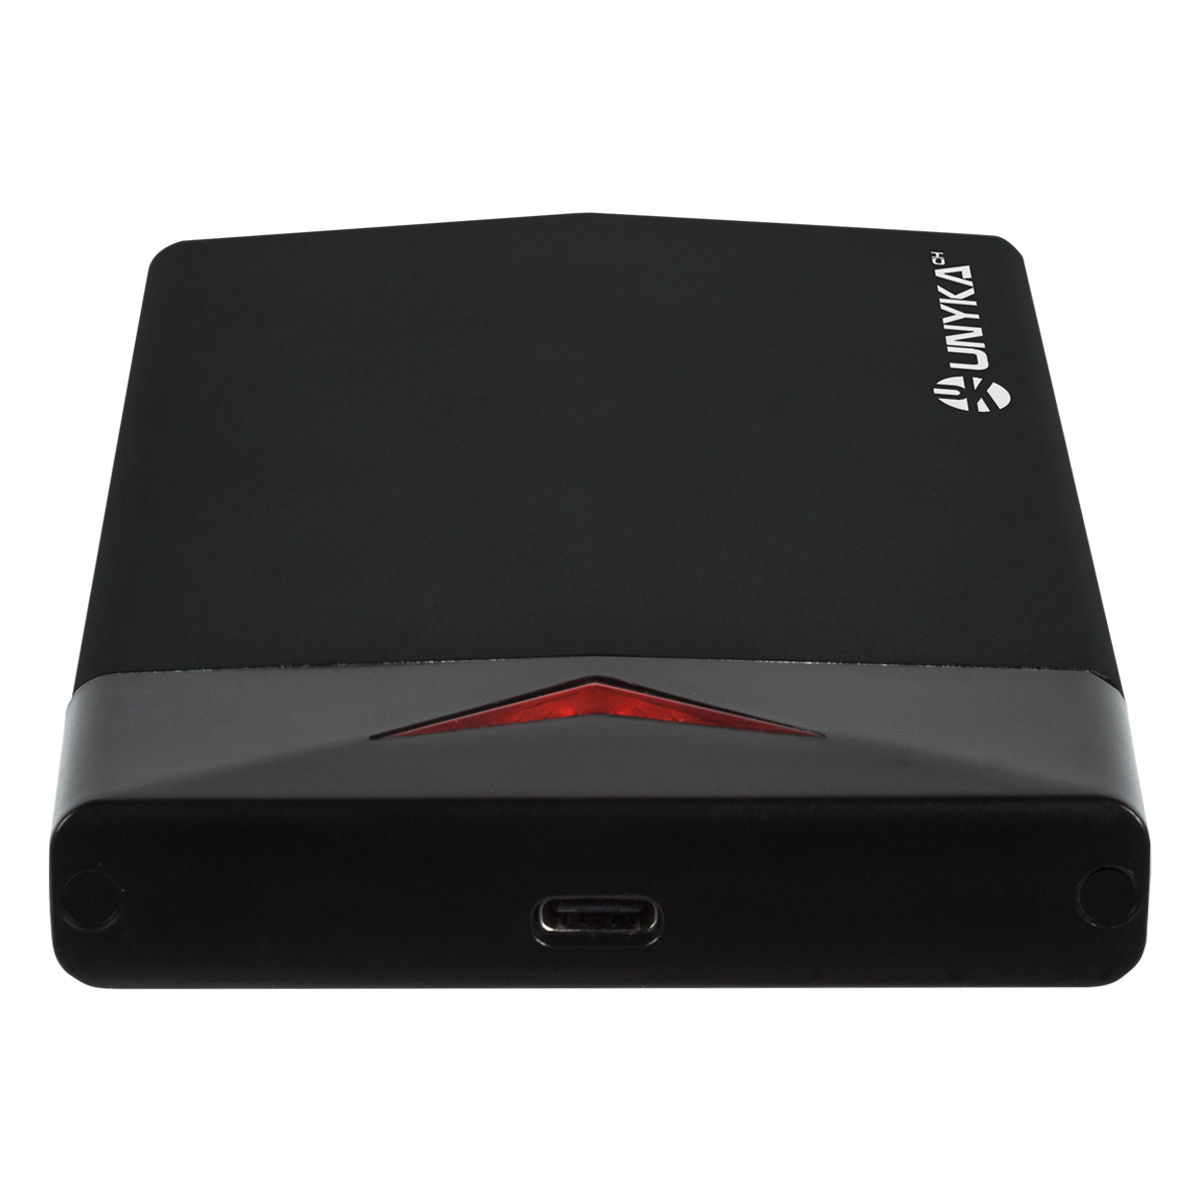 Caixa Externa Unyka UK 25303 2.5 HDD/SSD USB-C Preta 2